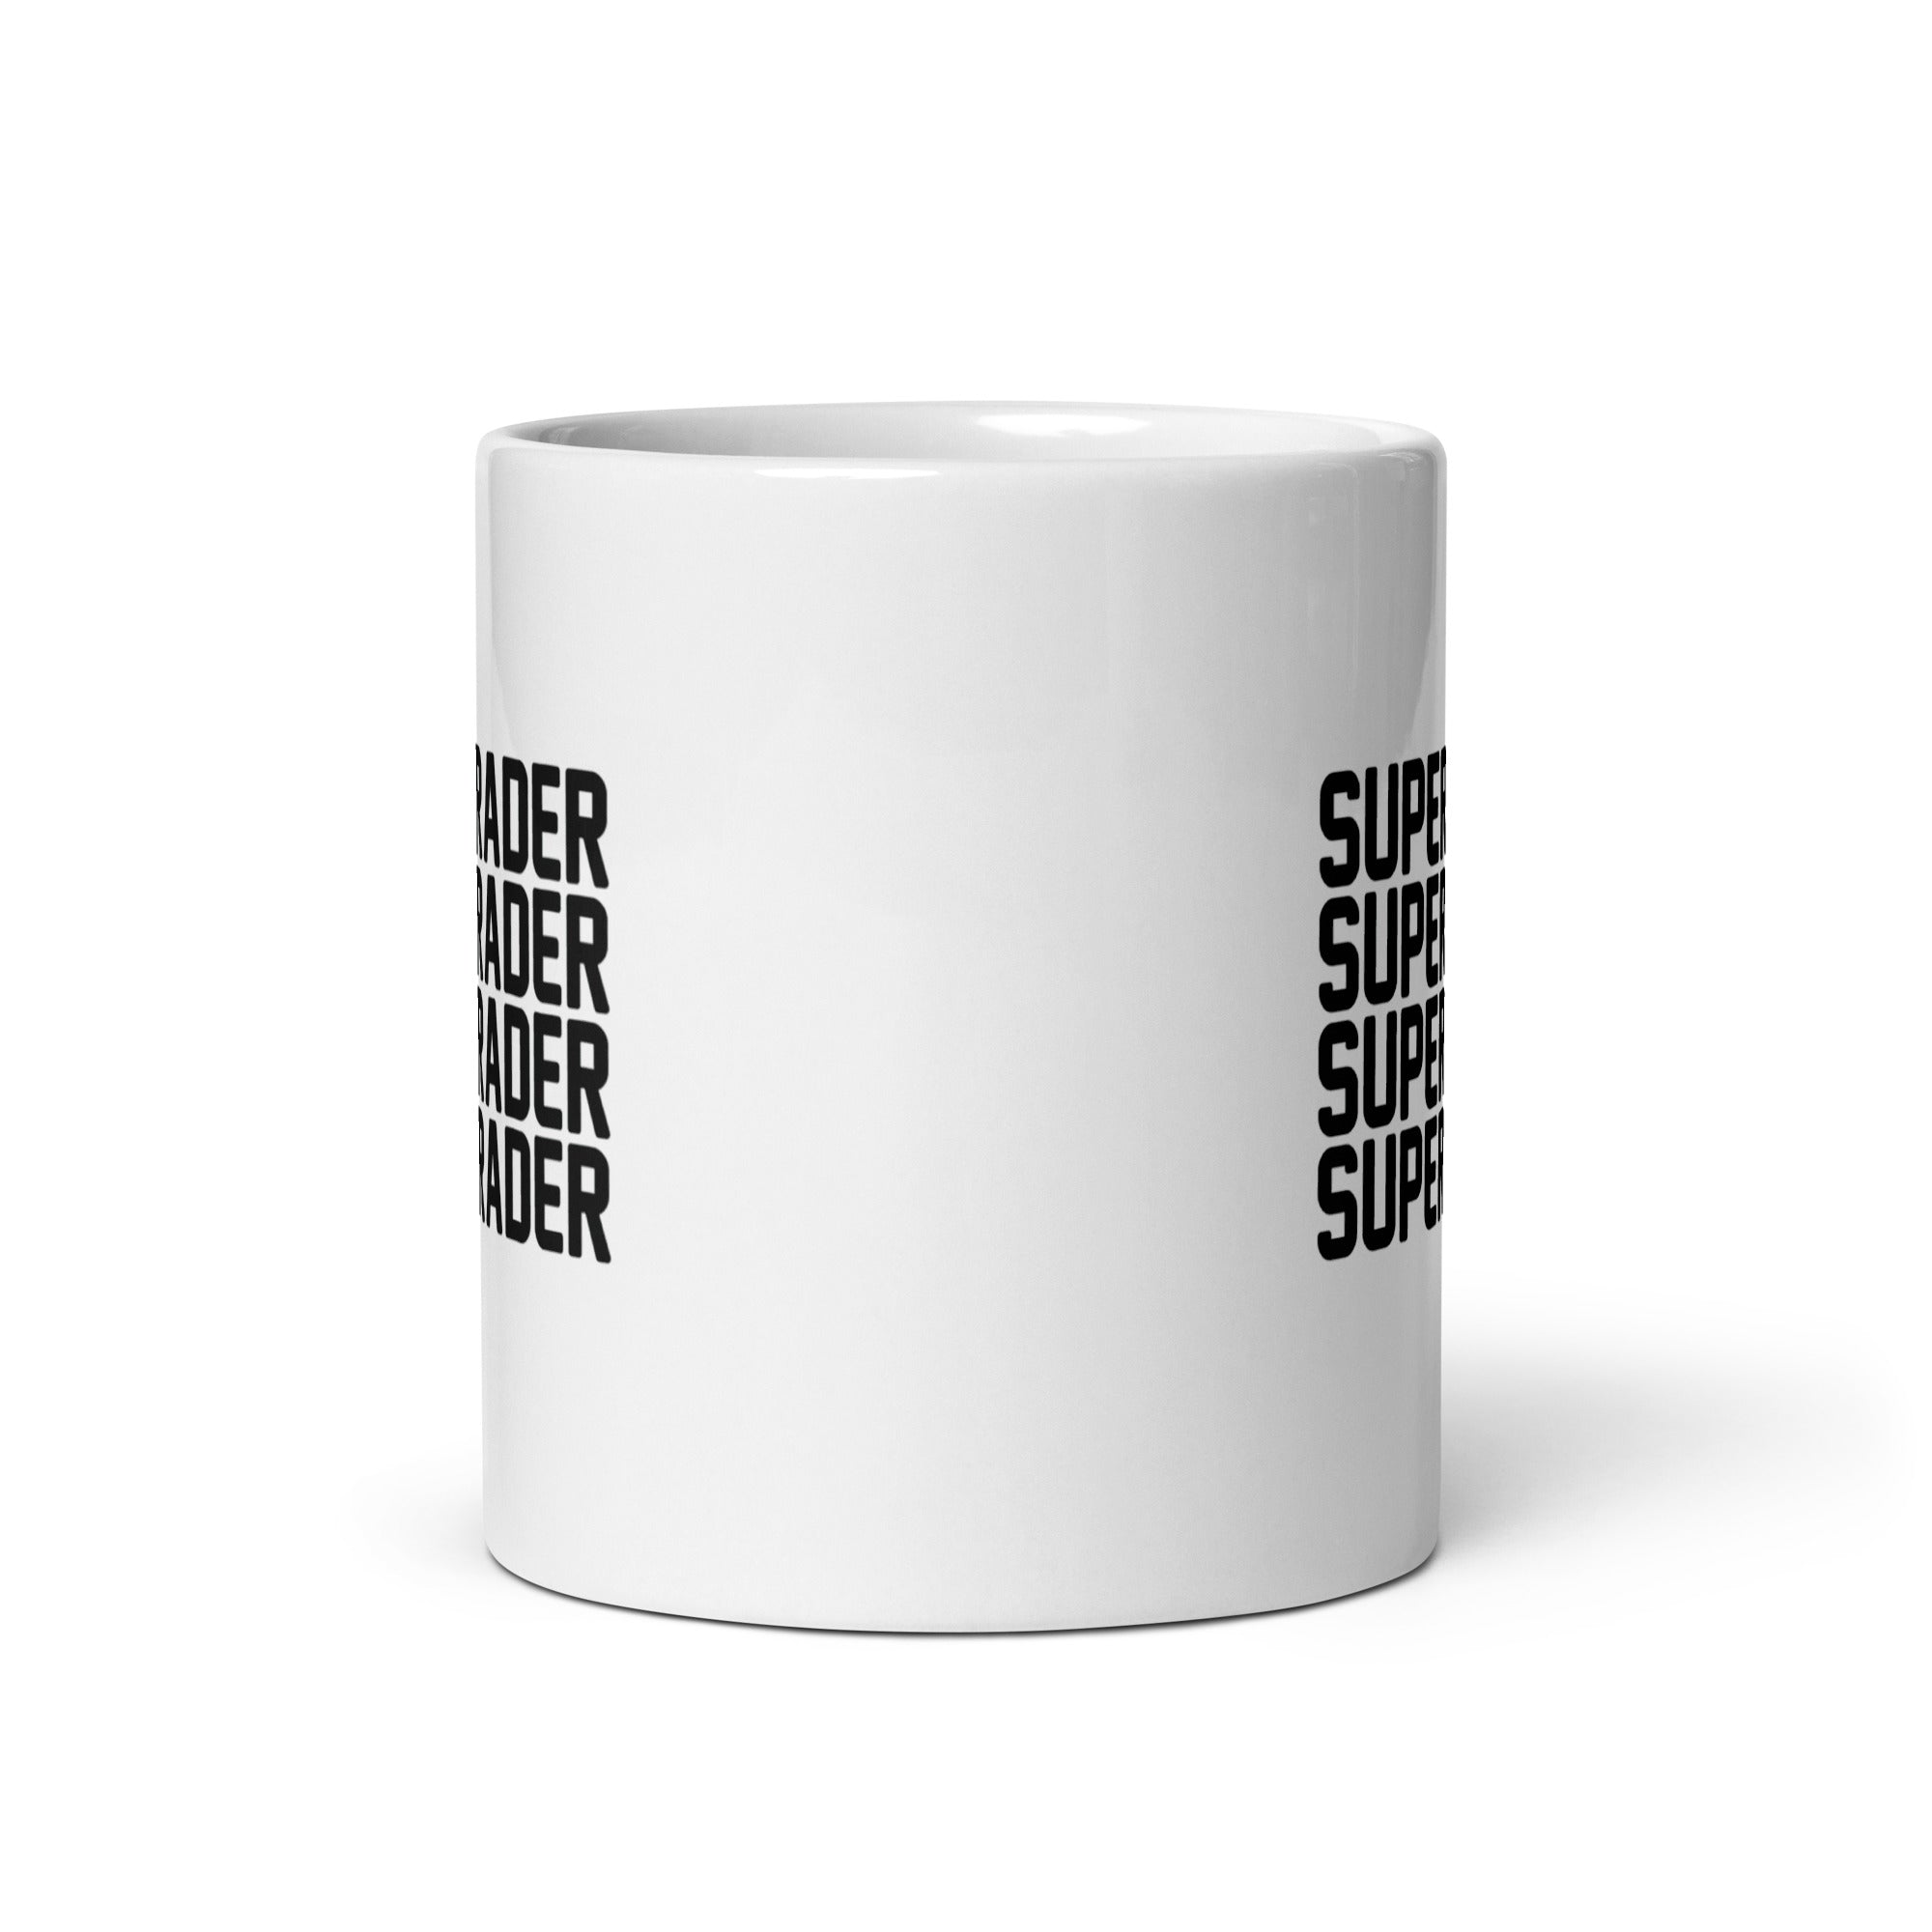 White glossy mug |  Supertrader